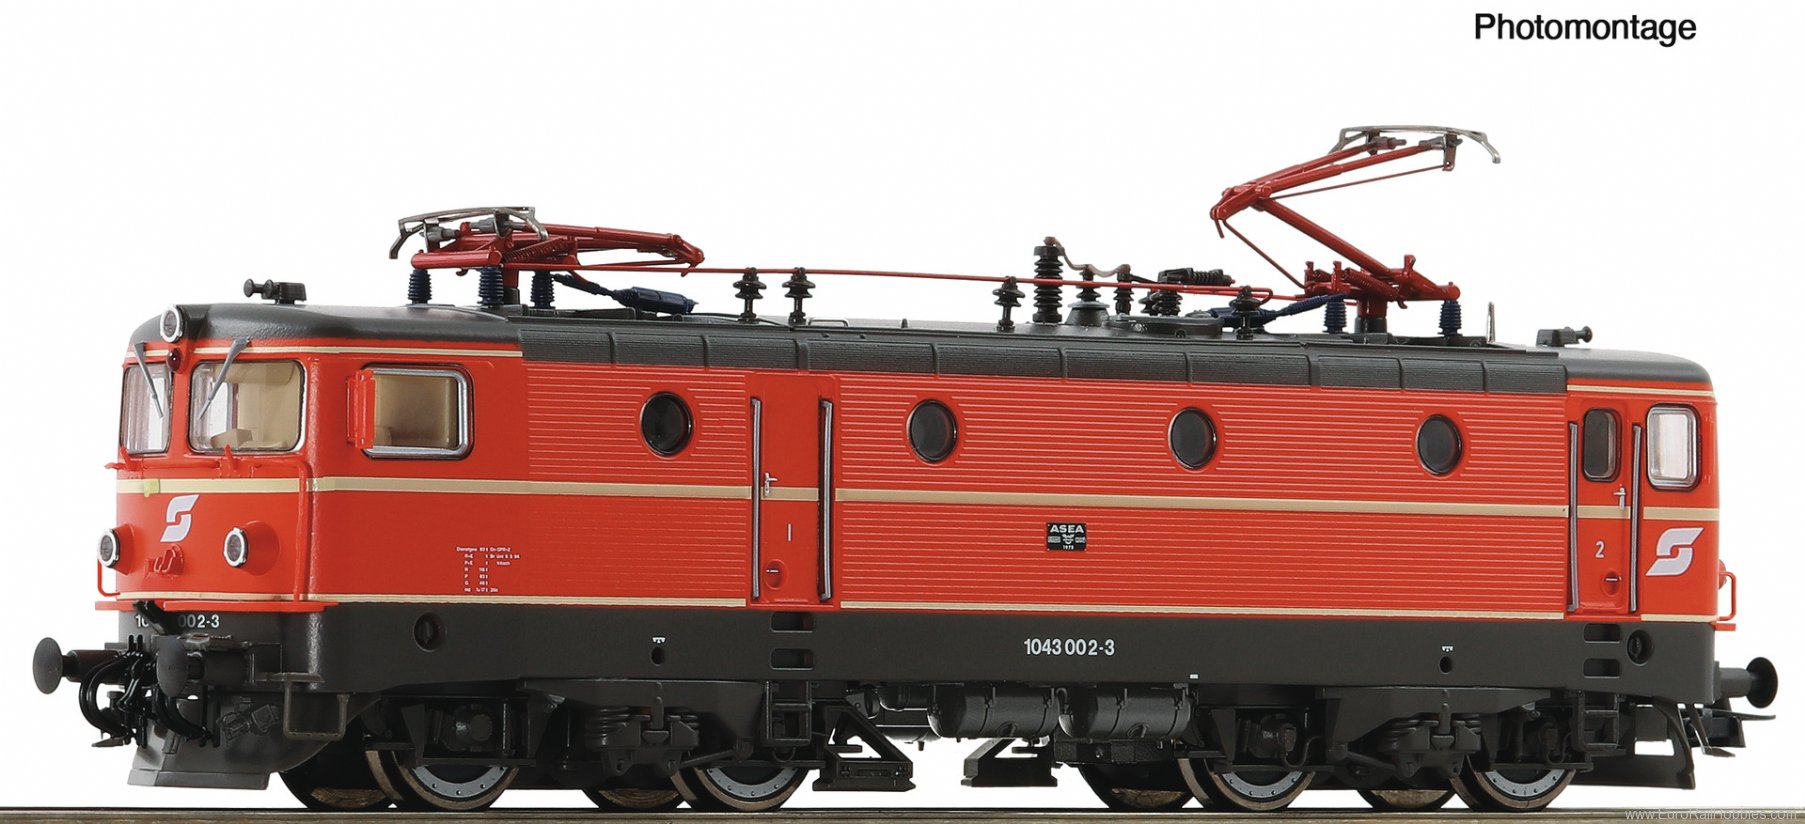 Roco 7510072 Electric locomotive 1043 002-3, ÃBB (DCC S